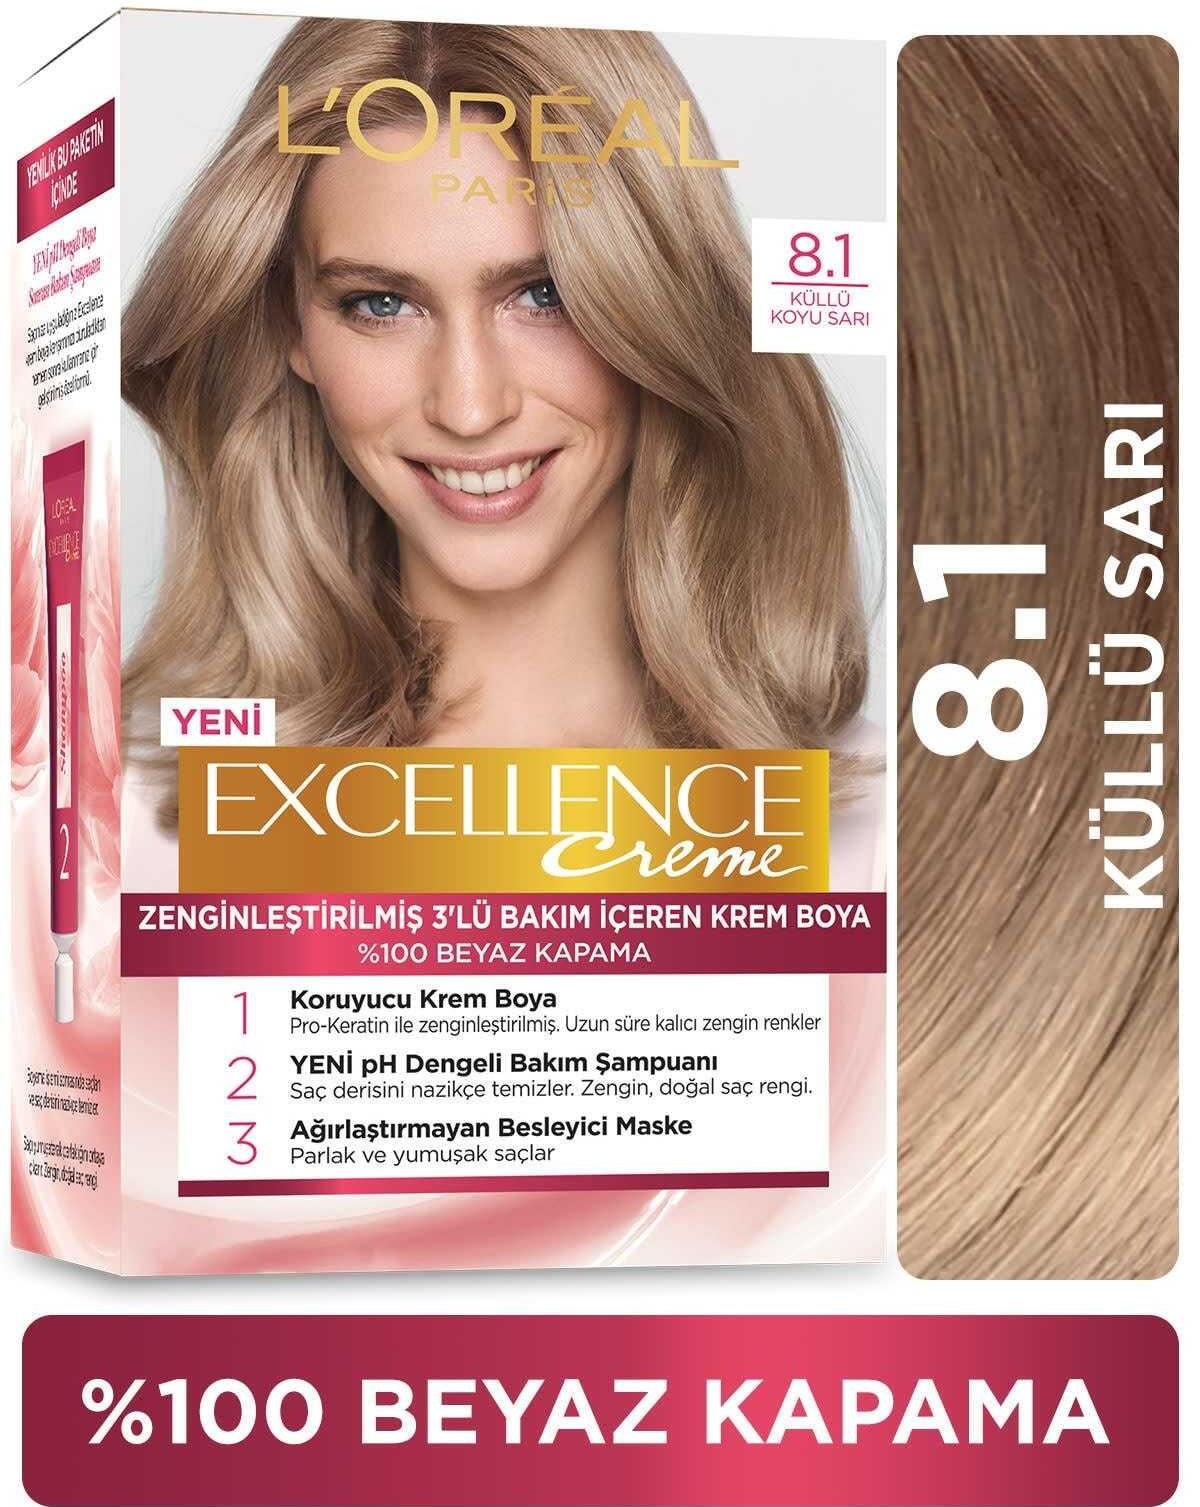 کیت رنگ مو لورآل سری enceexcell شماره ۶.۳۲ حجم ۴۸ میلی لیتر رنگ بلوند دودی تیره